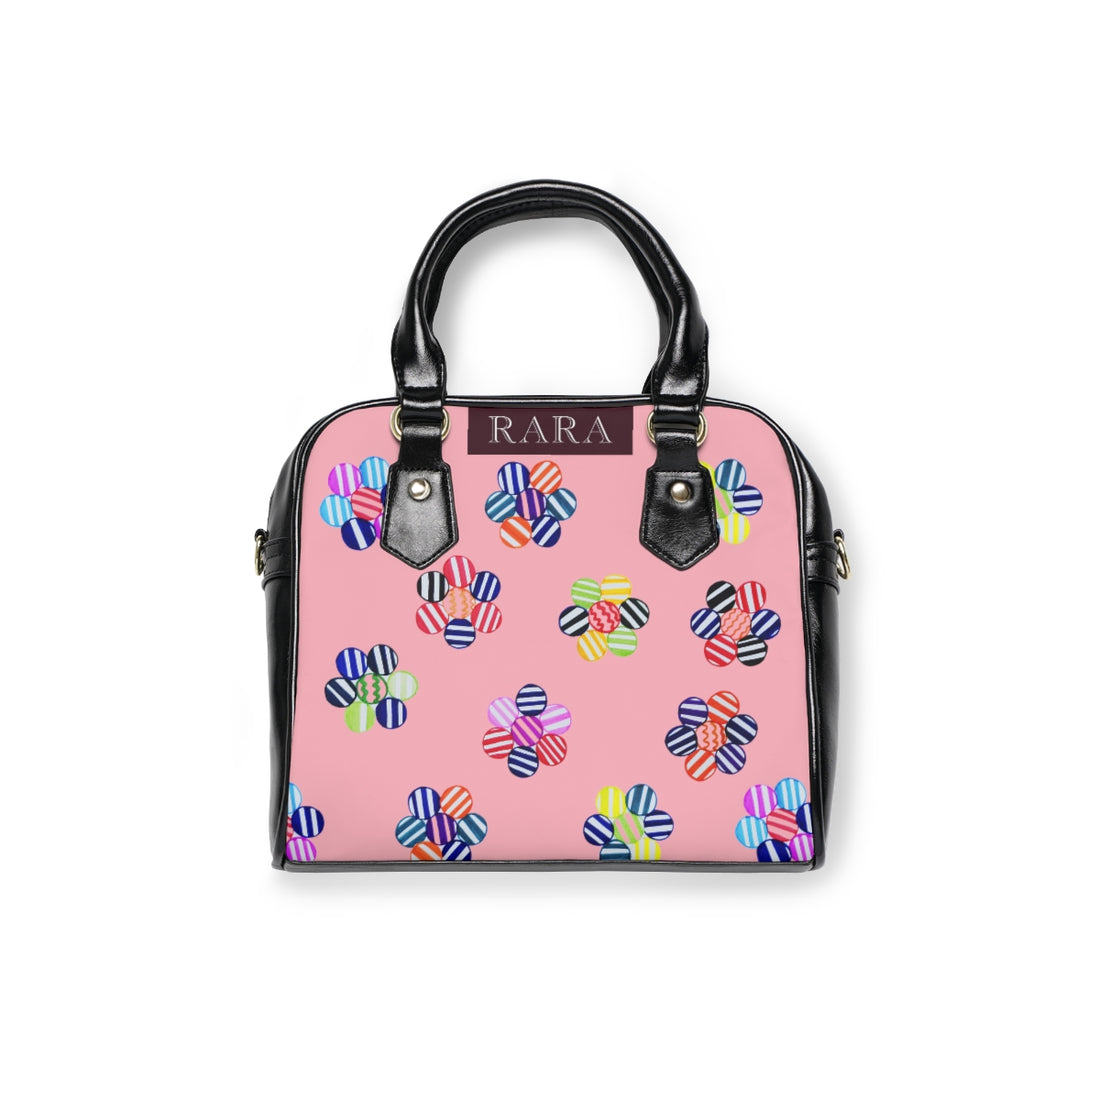 Blush geometric floral pu leather handbag